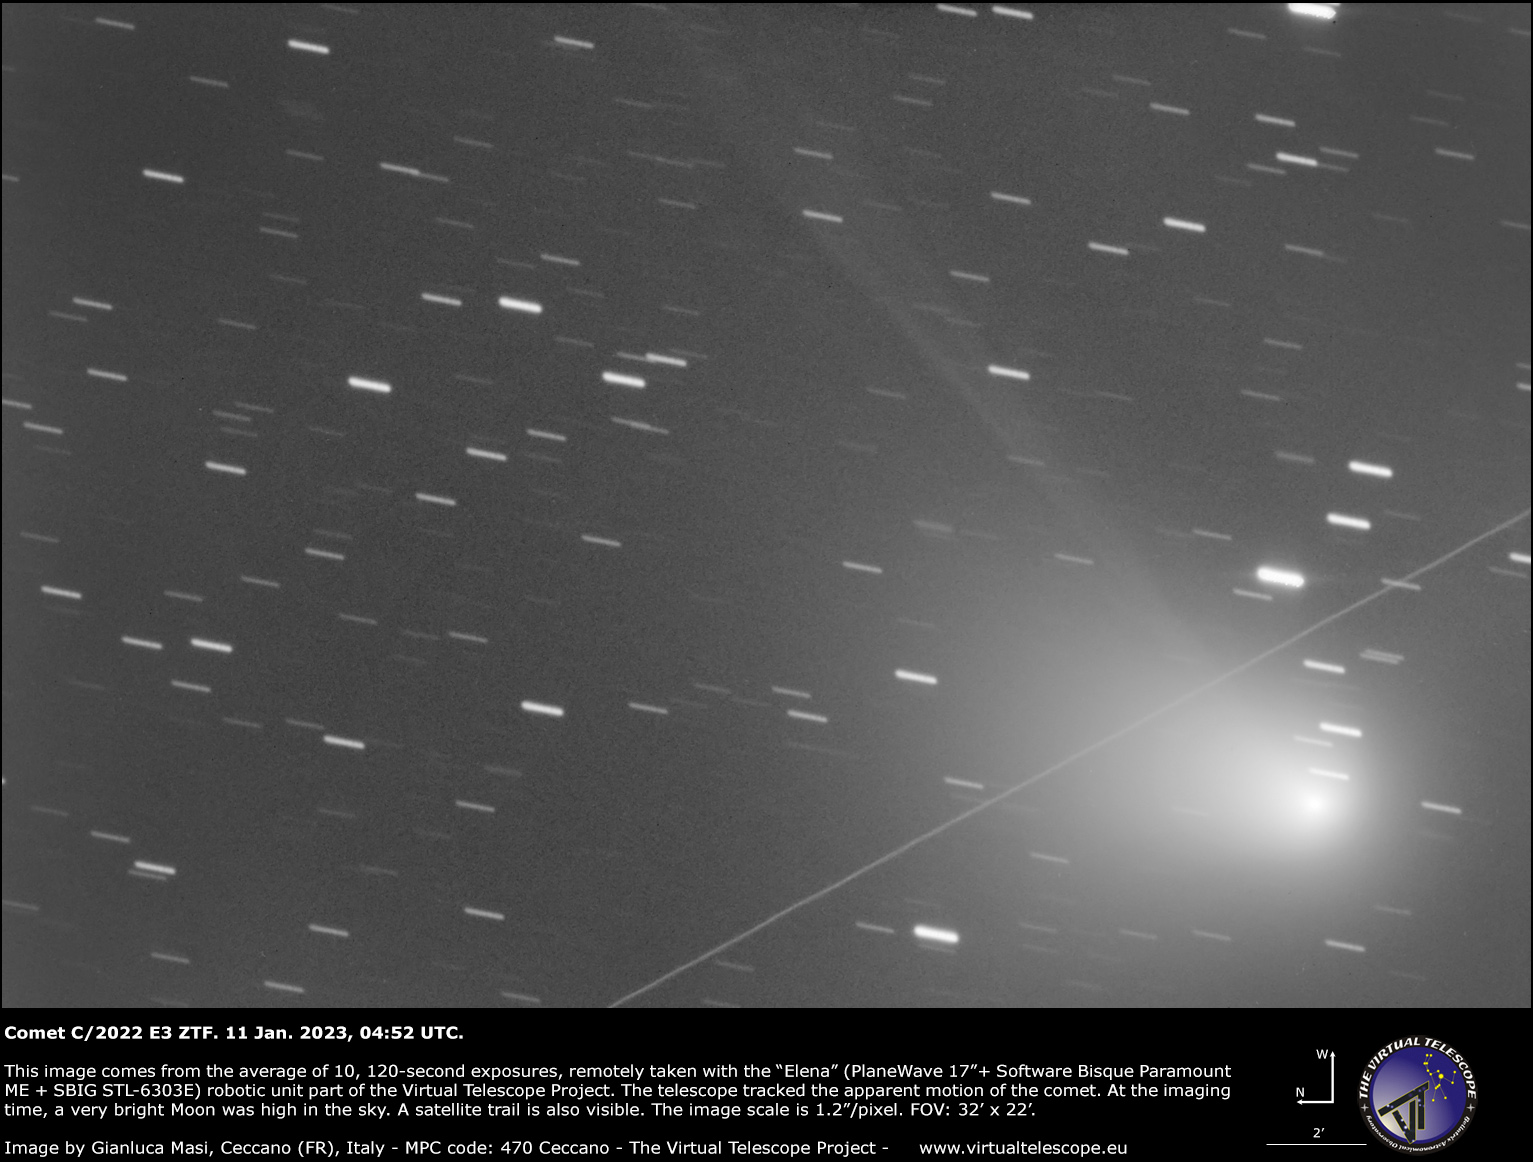 Comet C/2022 E3 ZTF, higher resolution. 11 Jan. 2023.